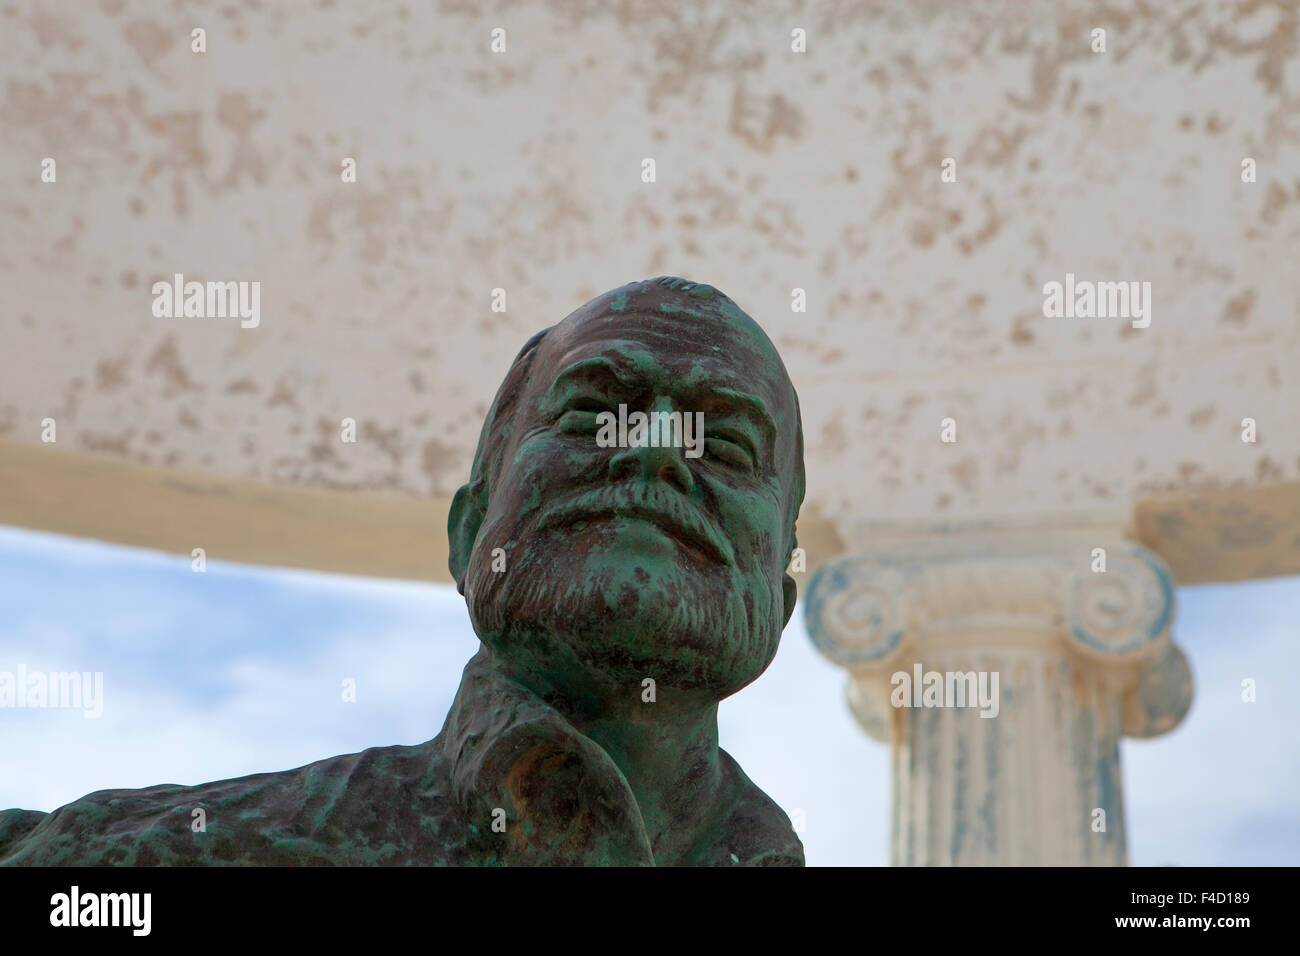 Cuba, Cojimar. Ernest Hemingway Bust, made by local fisherman in Cojimar. Stock Photo